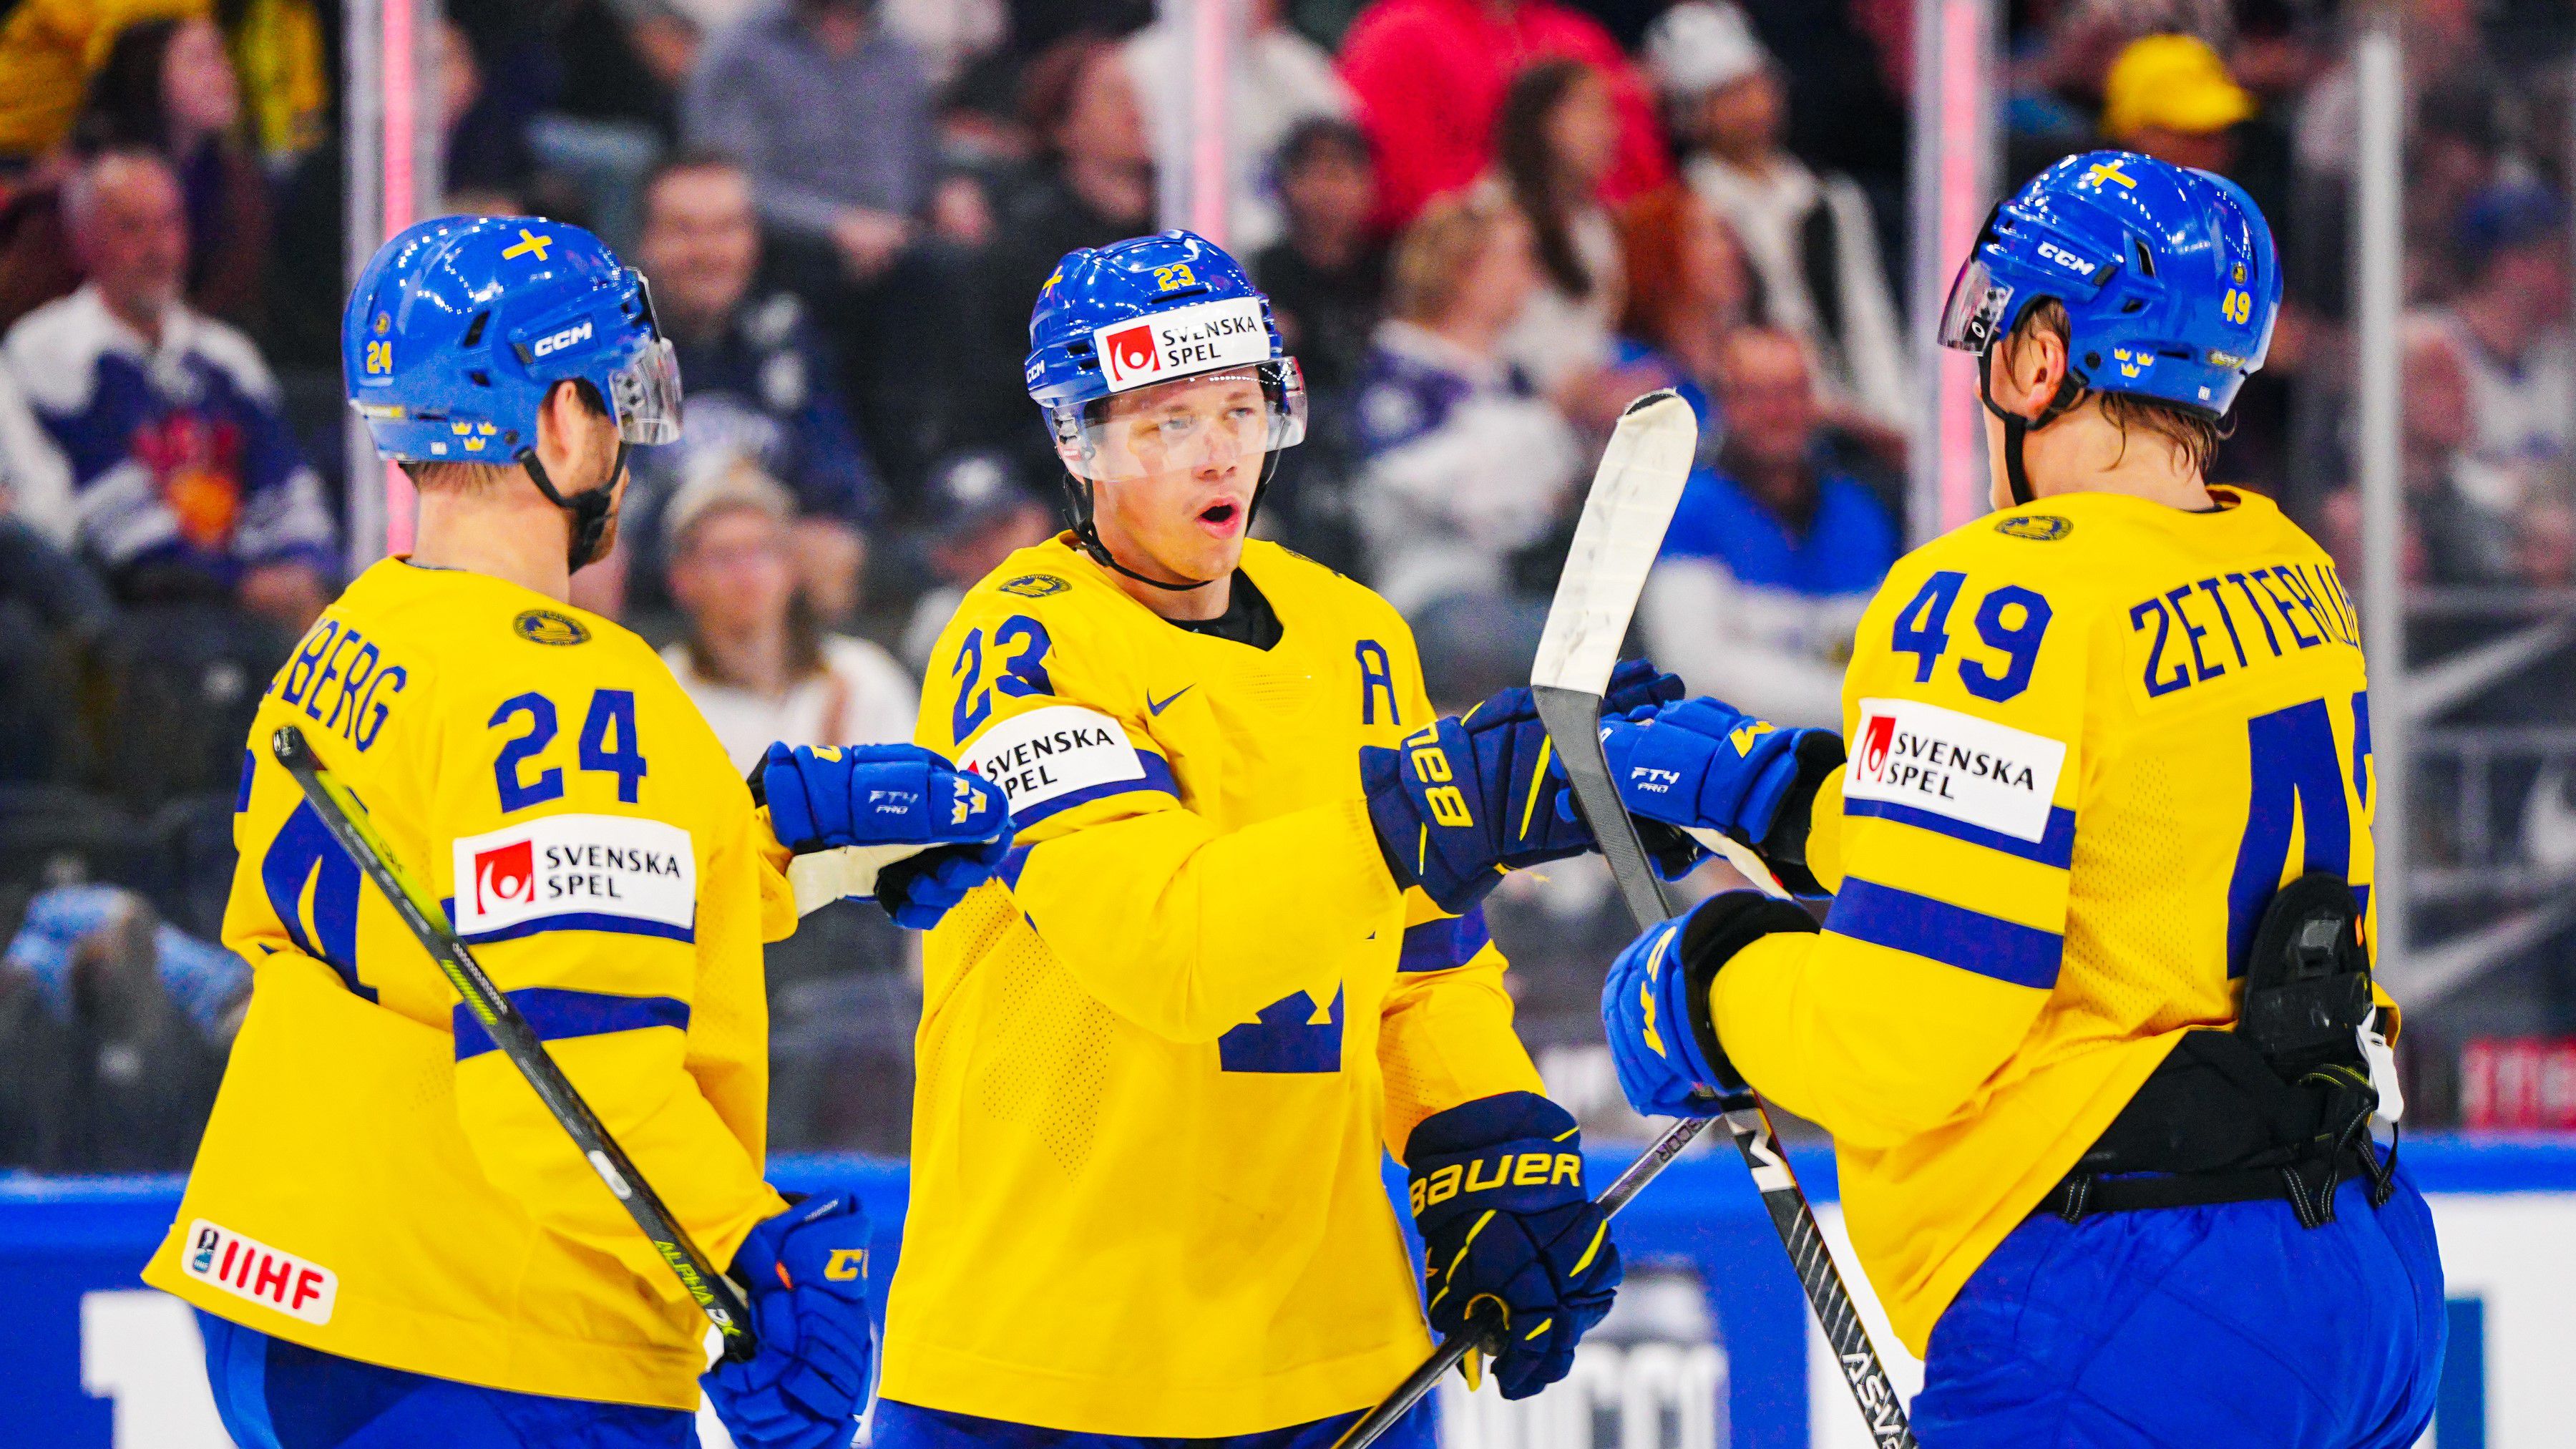 Svéd siker a magyar nyolcasban, Norvégia legyőzte Kanadát a jégkorong-vb-n